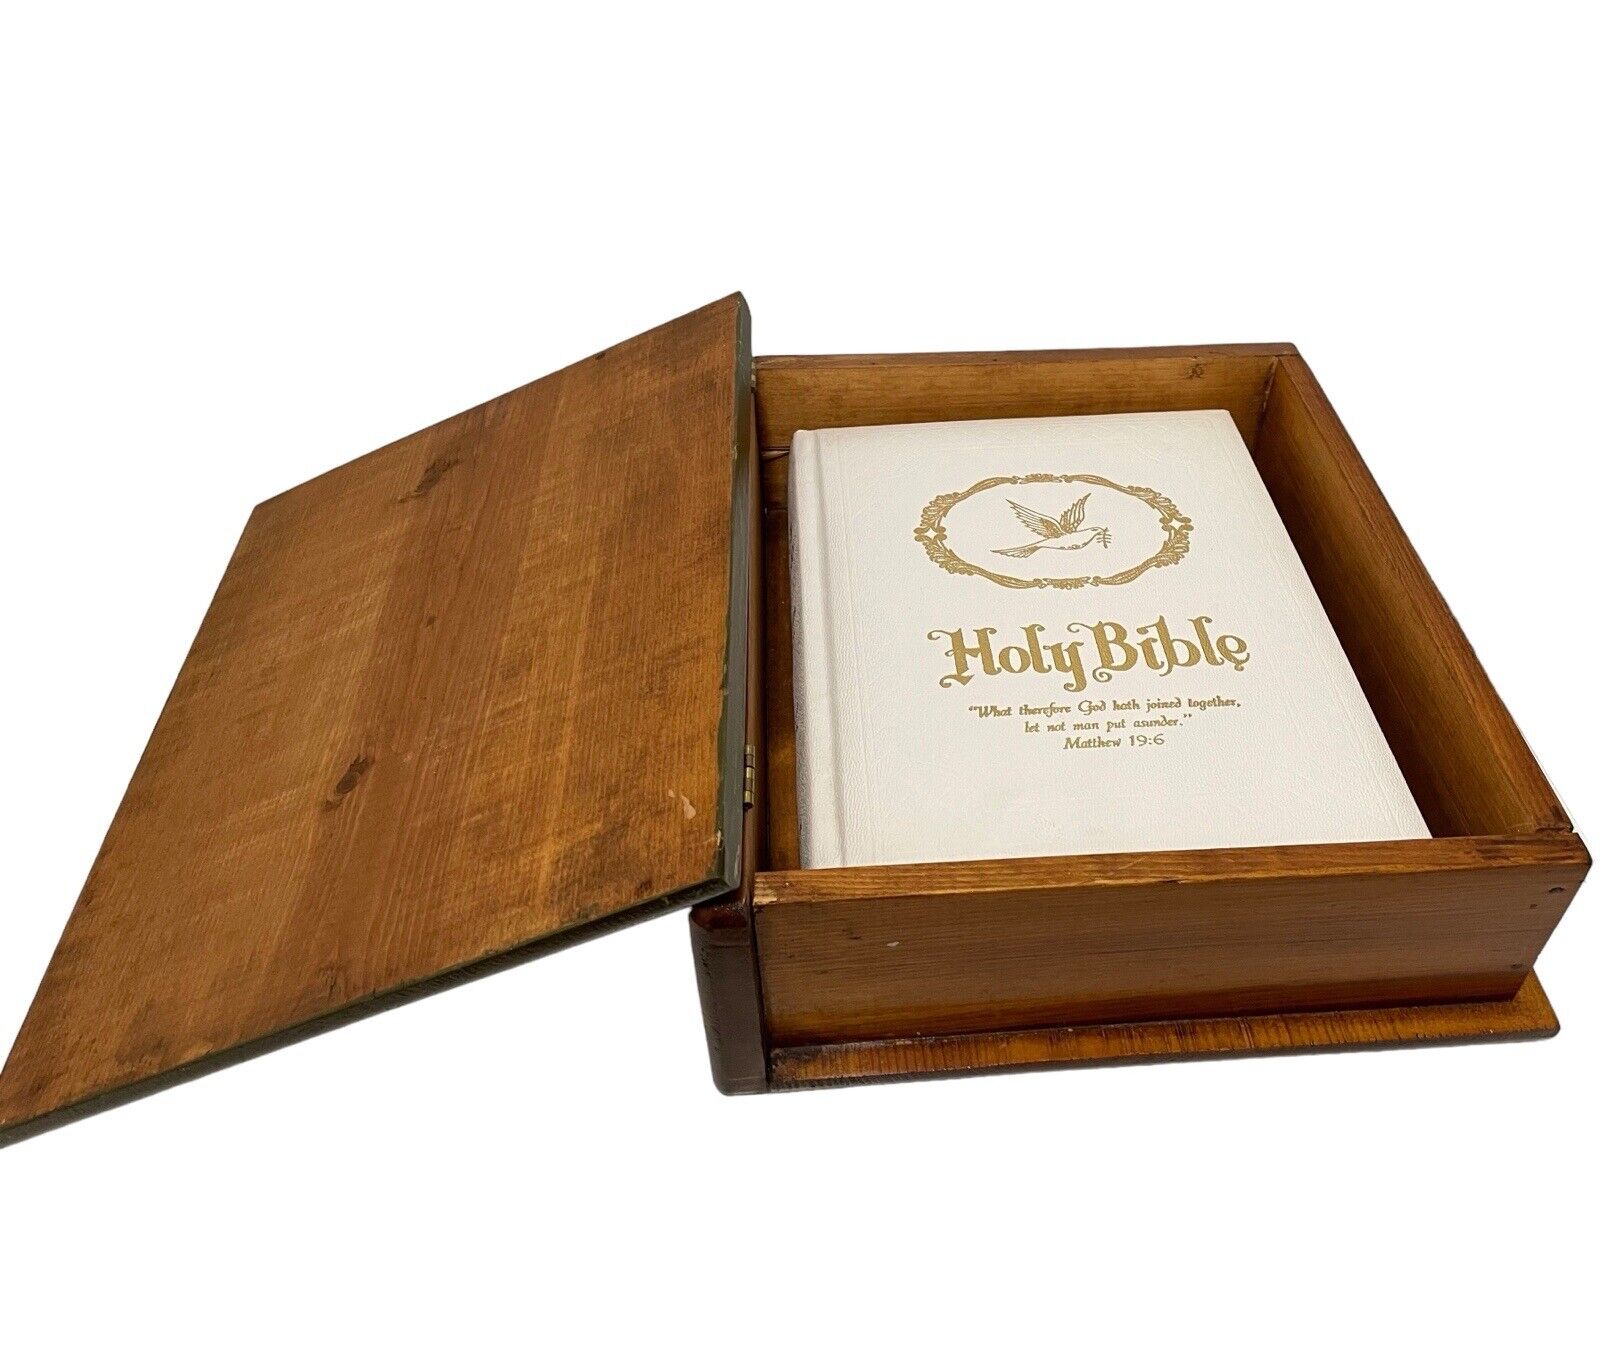 VTG 1982 Authentic Retro Blue Bird Bible Wood Box & VTG 1971 Bible Wedding